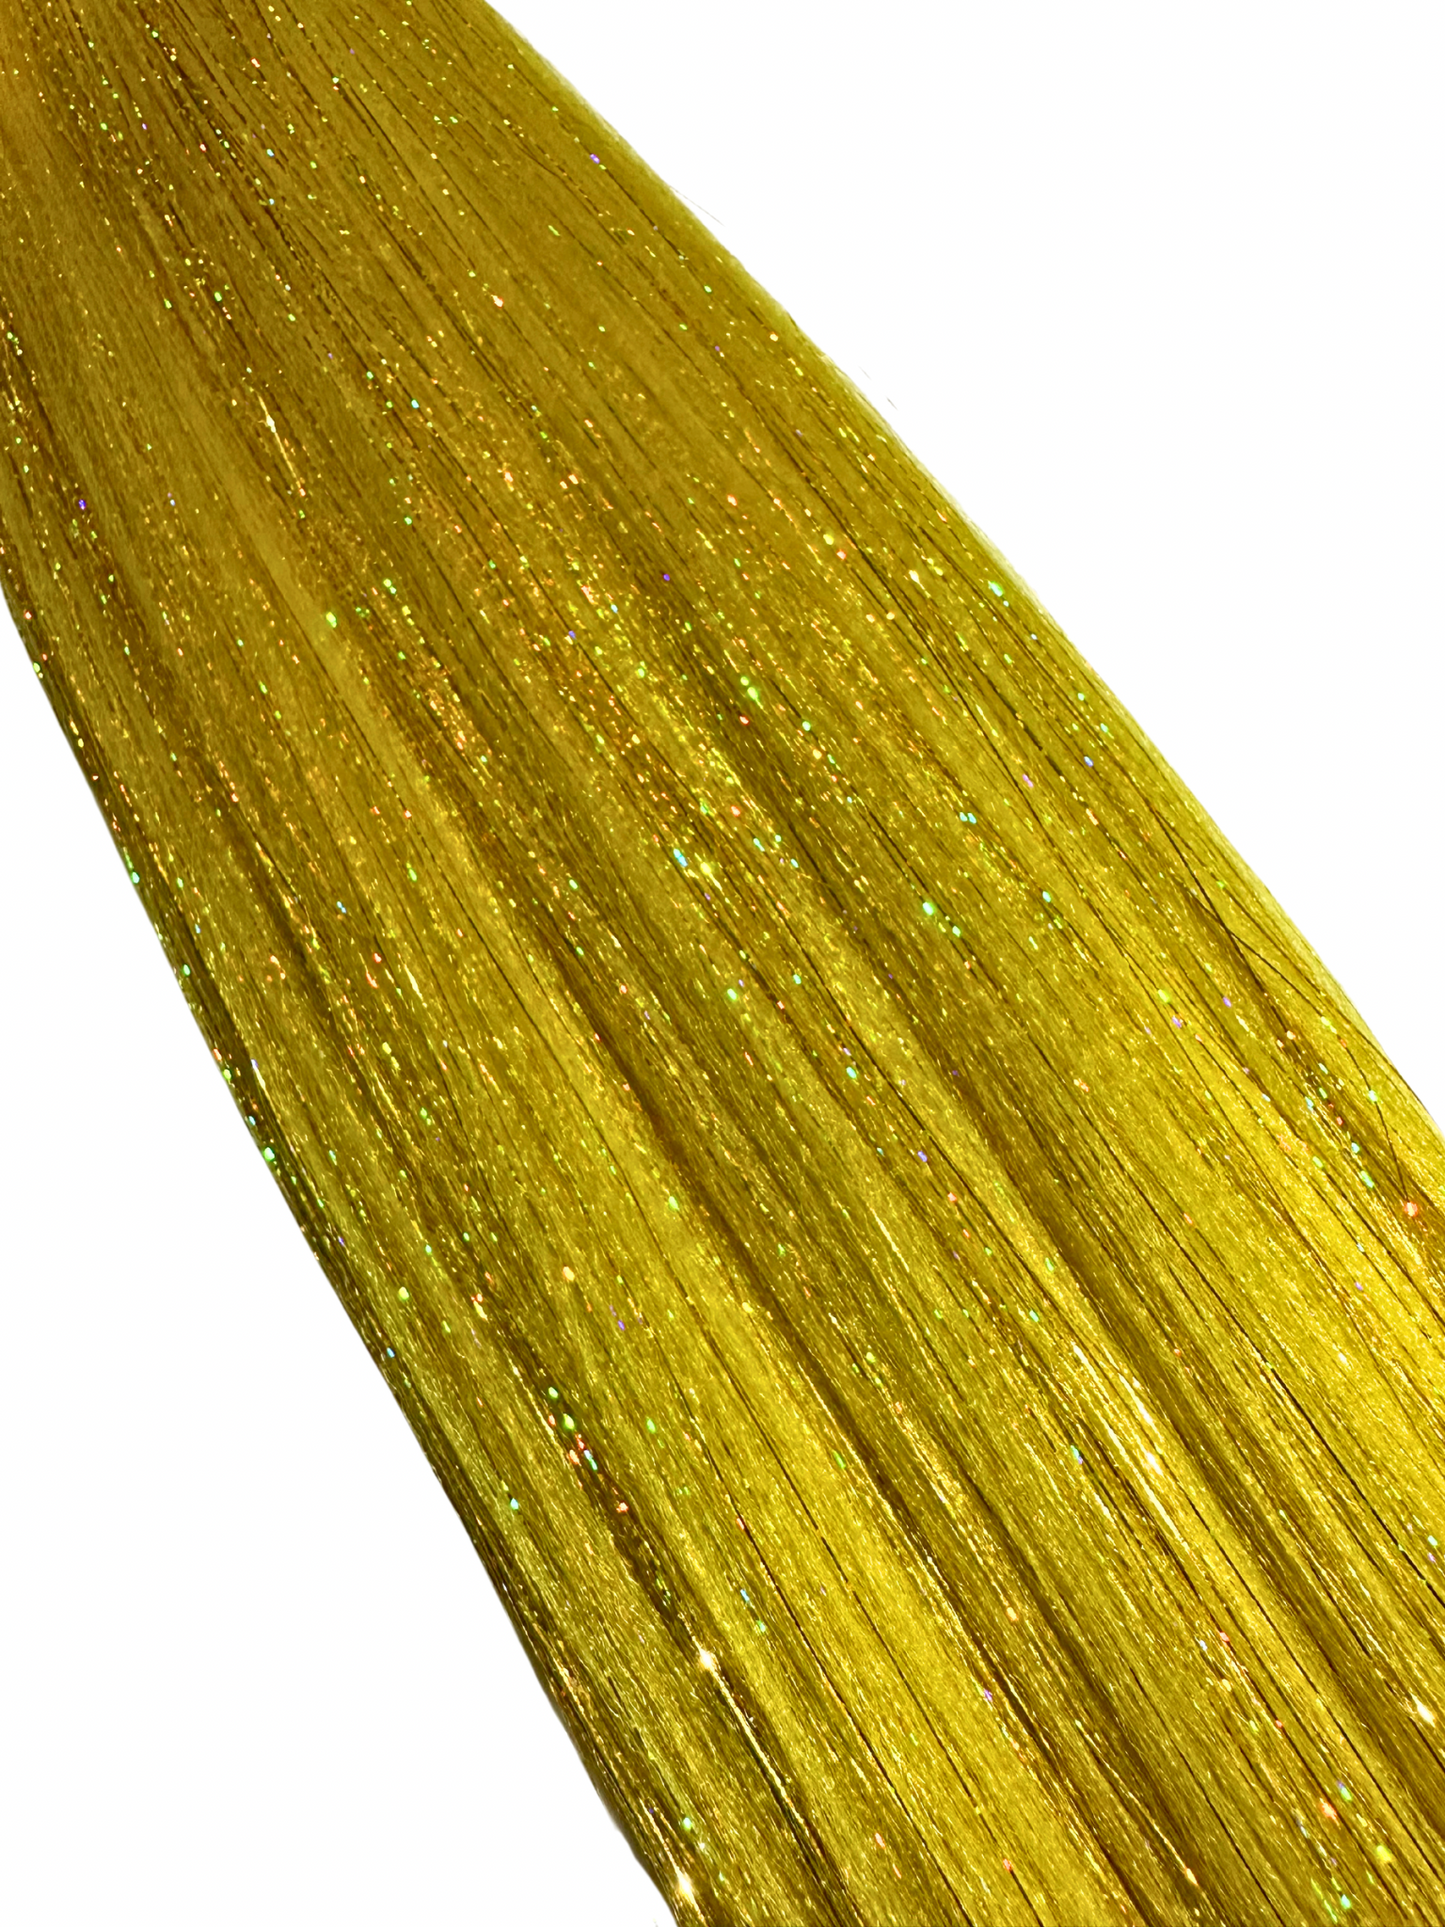 Yellow/Gold Shimmer MIDI braid 45cm